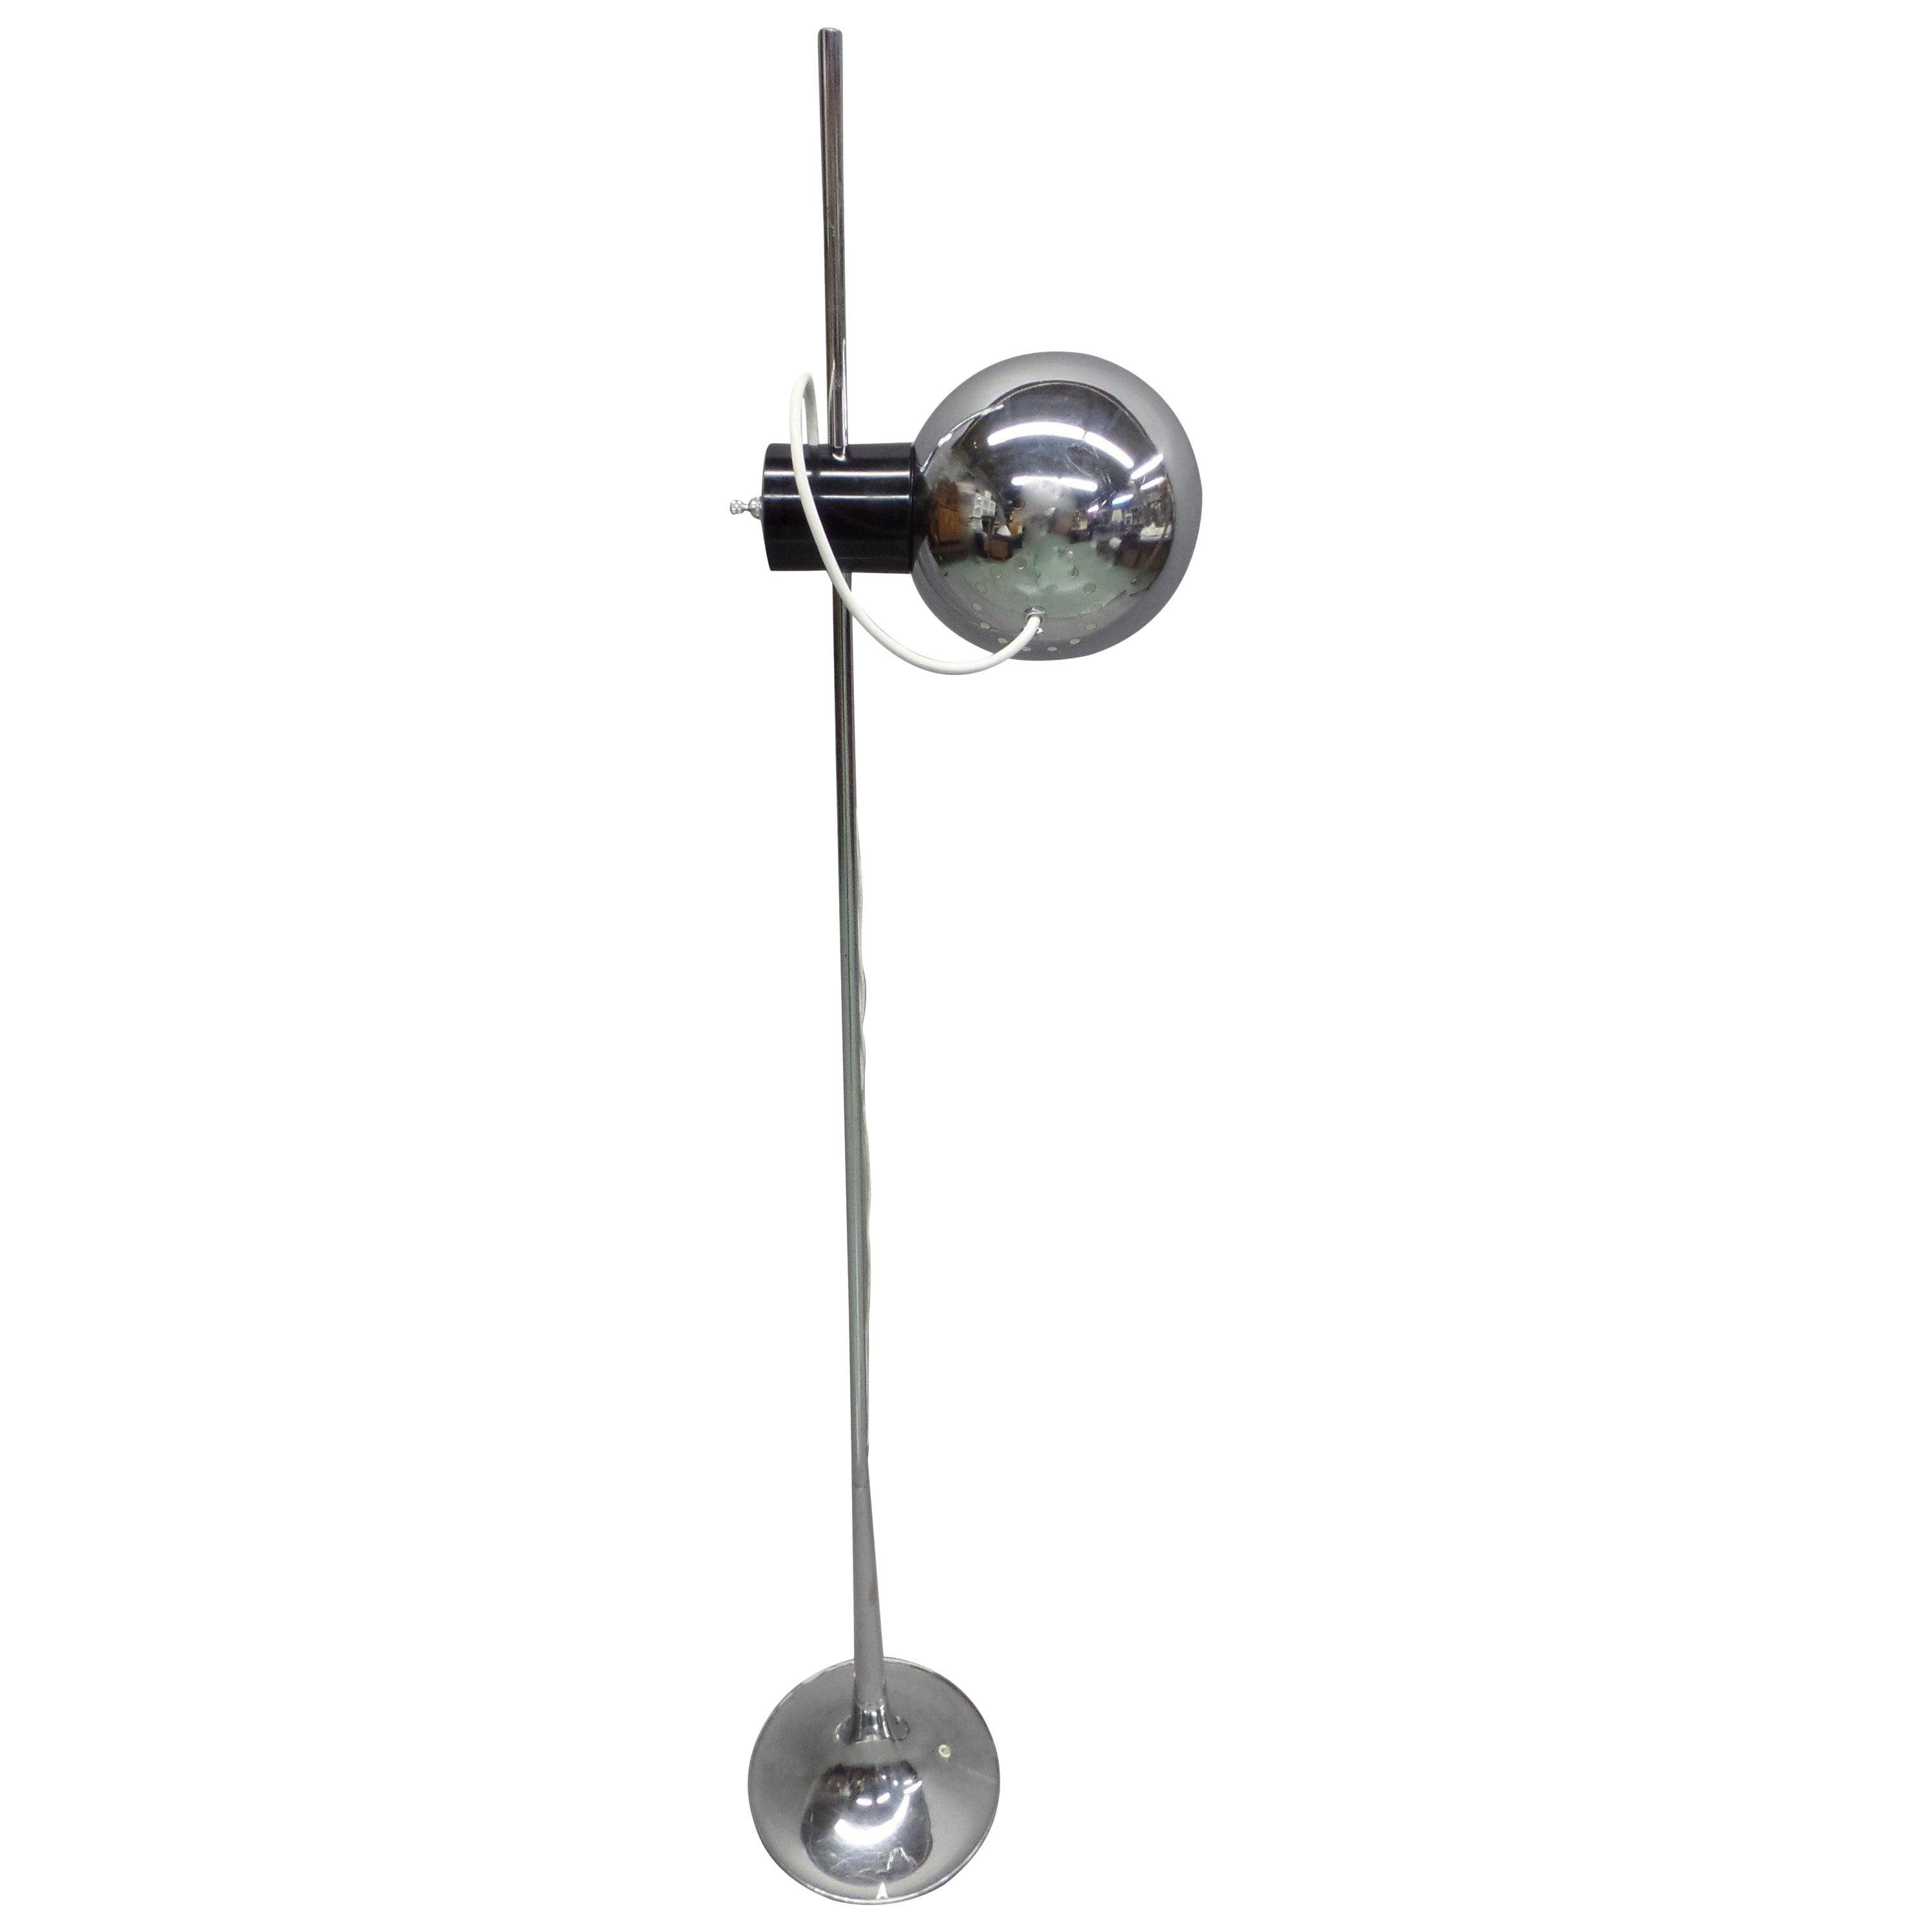 Italian Mid-Century Modern Adjustable and Articulated Floor Lamp by Reggiani